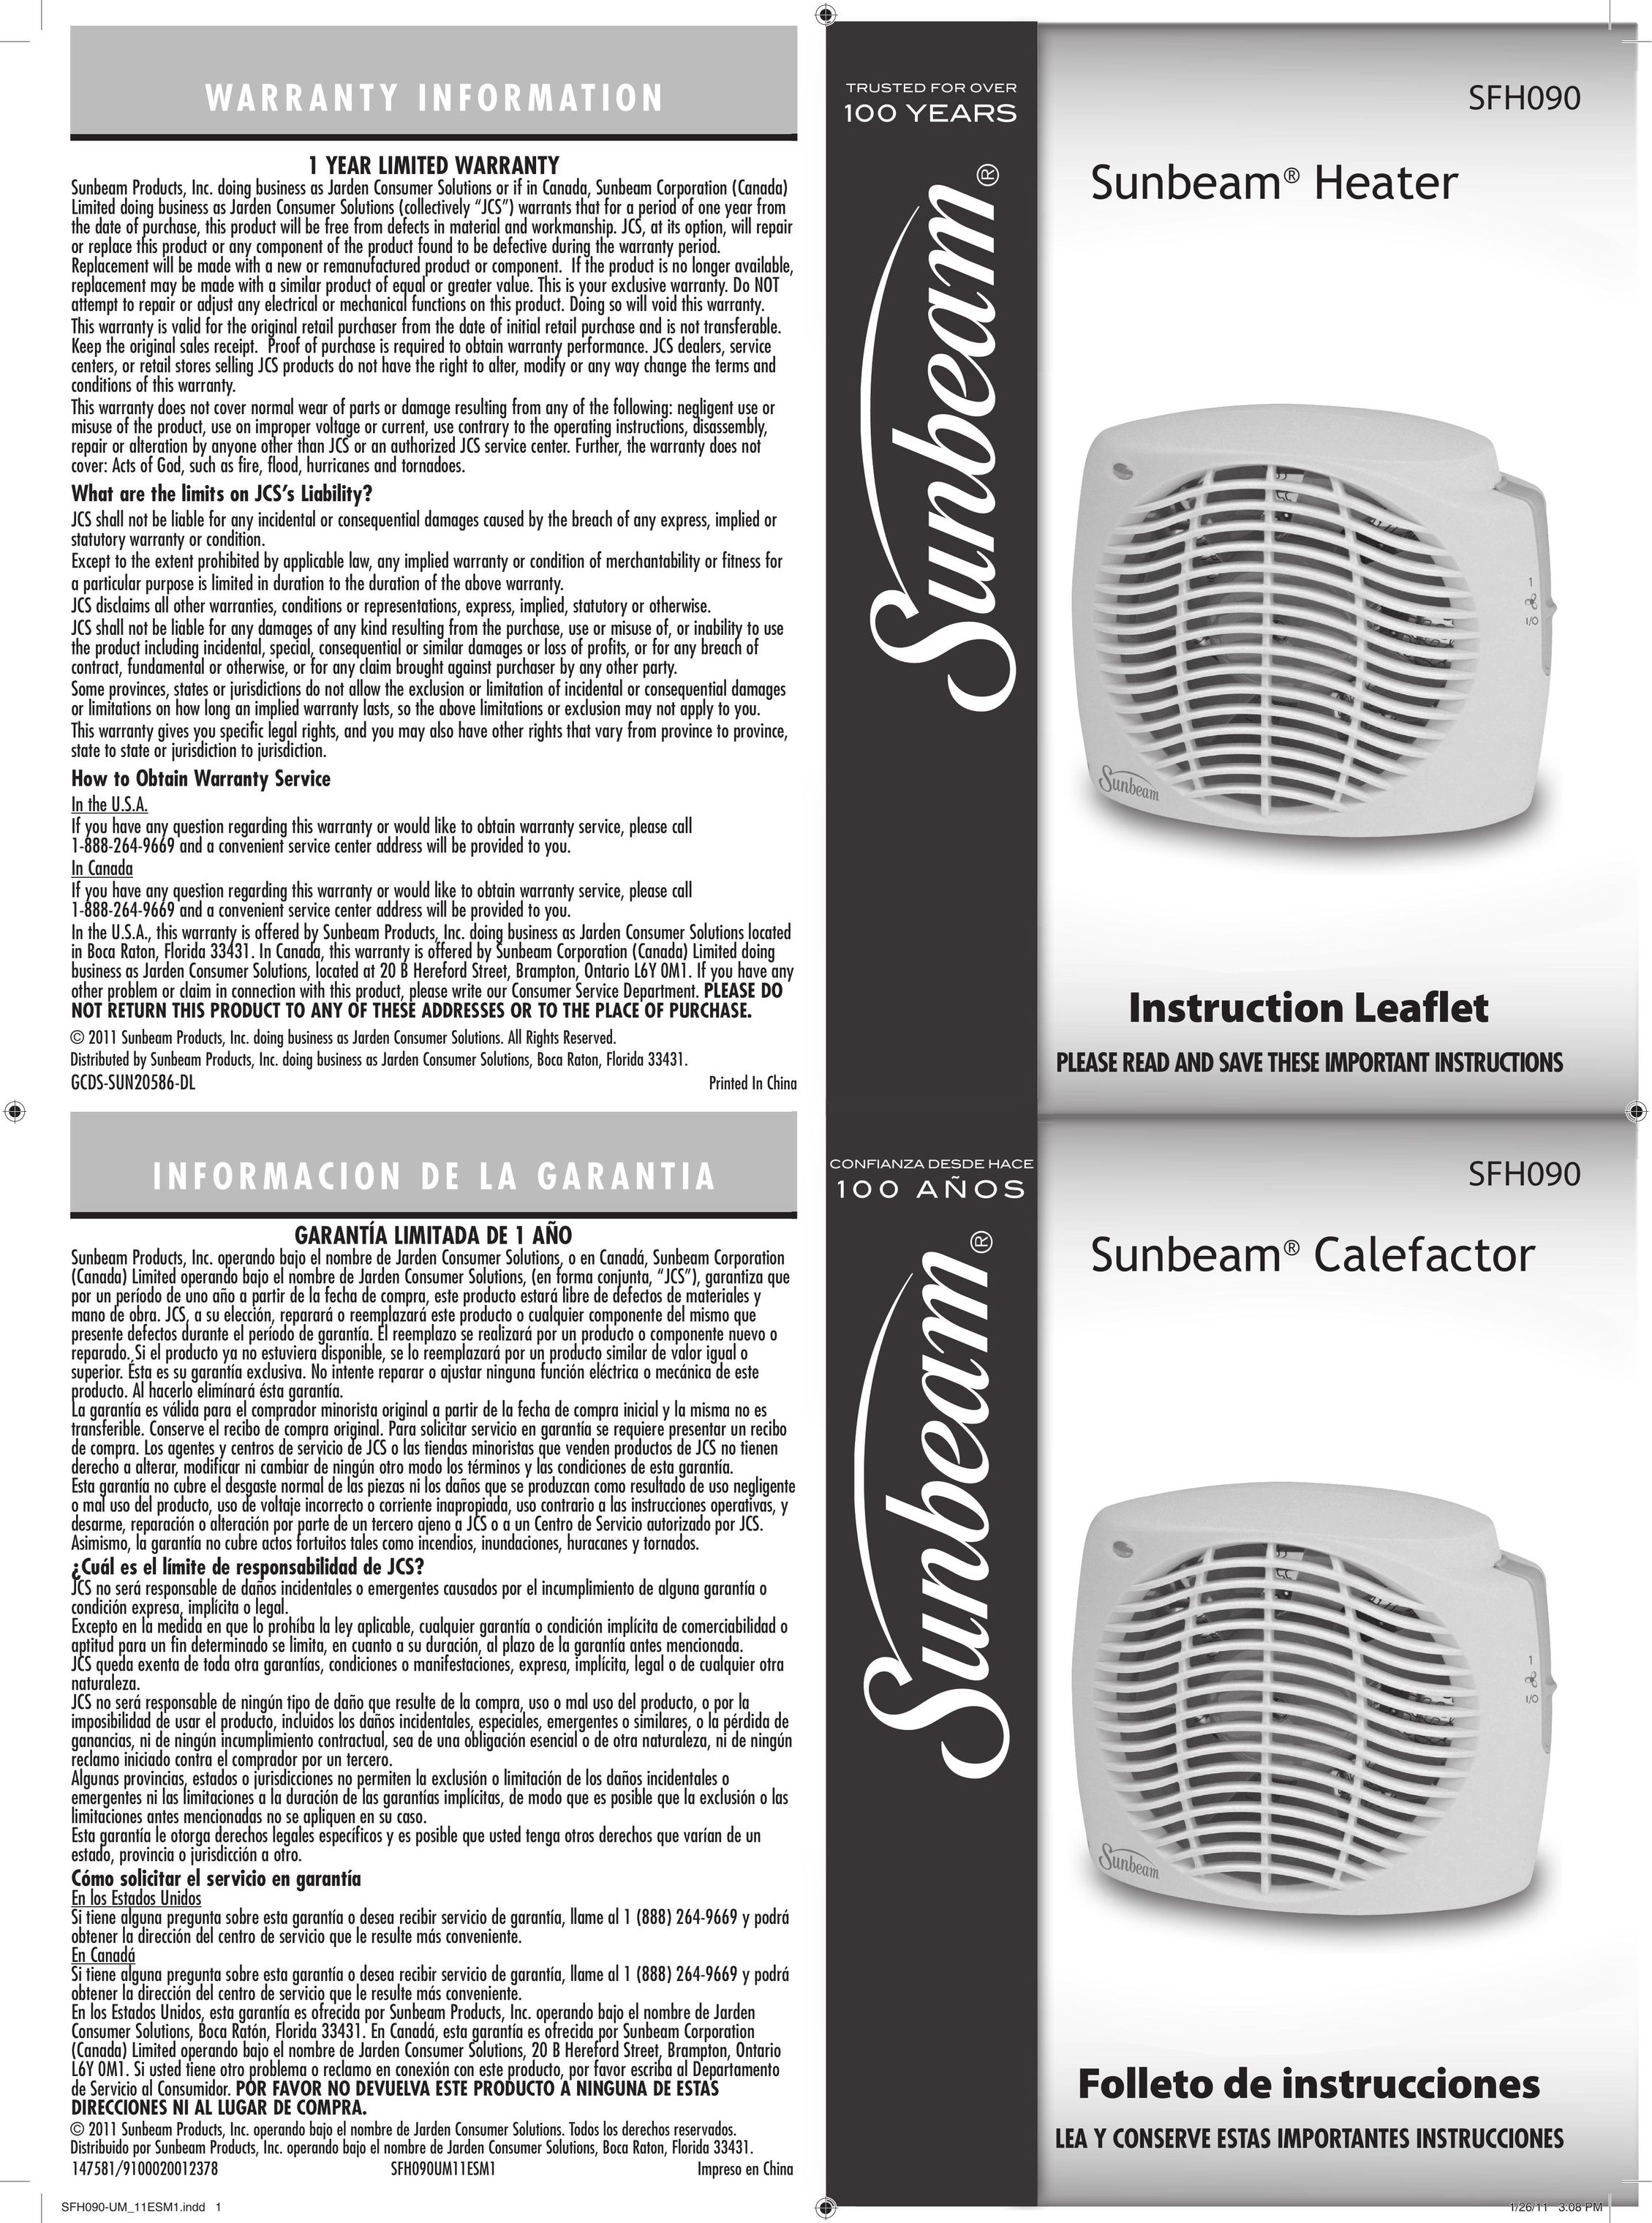 Sunbeam SFH090 Electric Heater User Manual